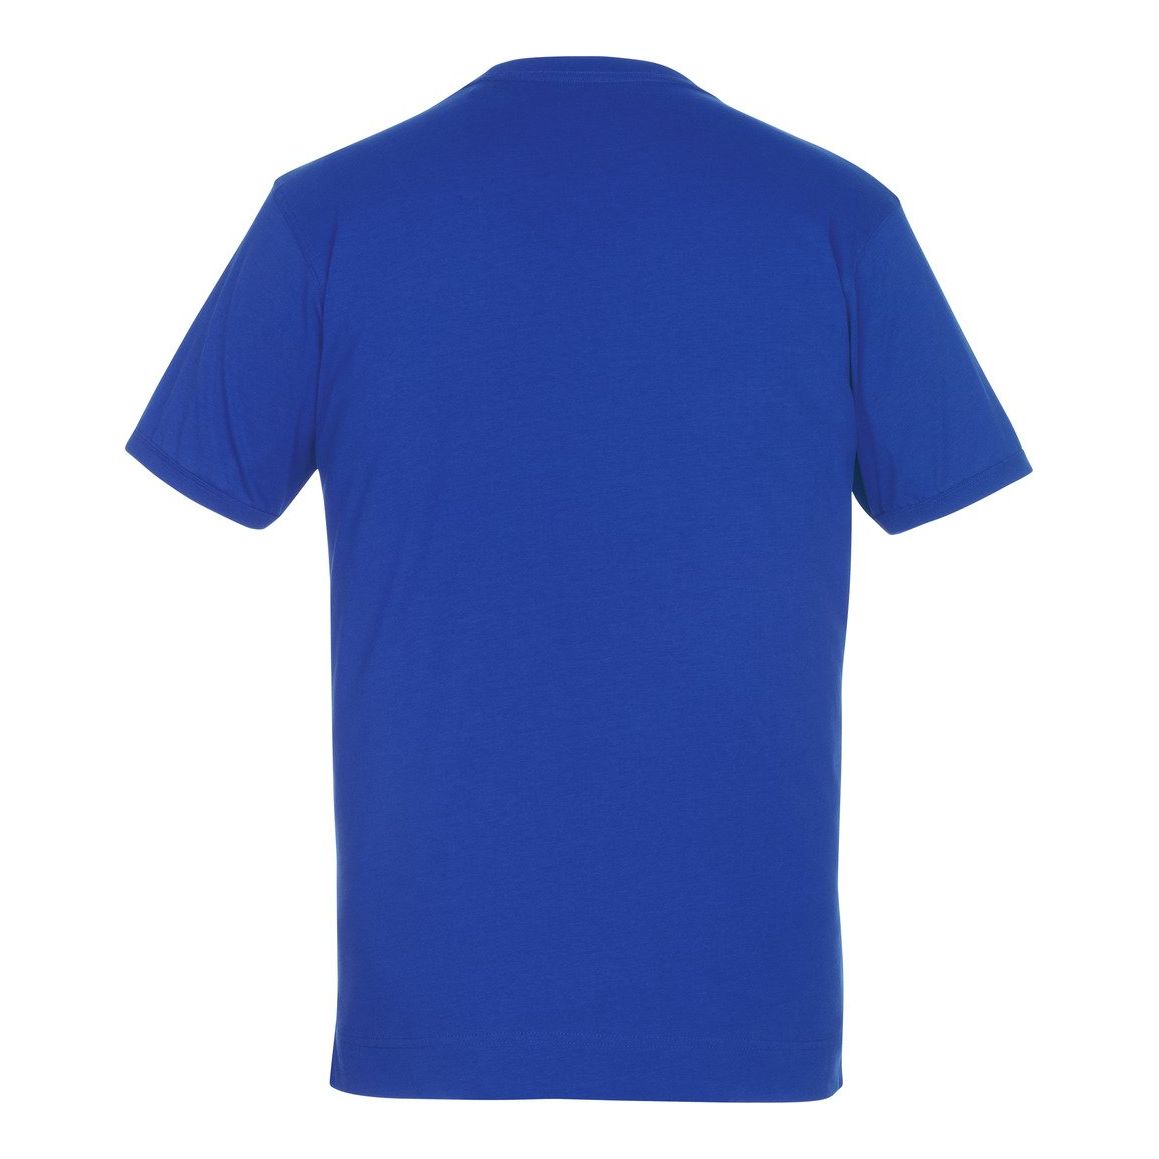 Mascot Algoso T-shirt V-Neck Royal Blue 50415-250-11 Back